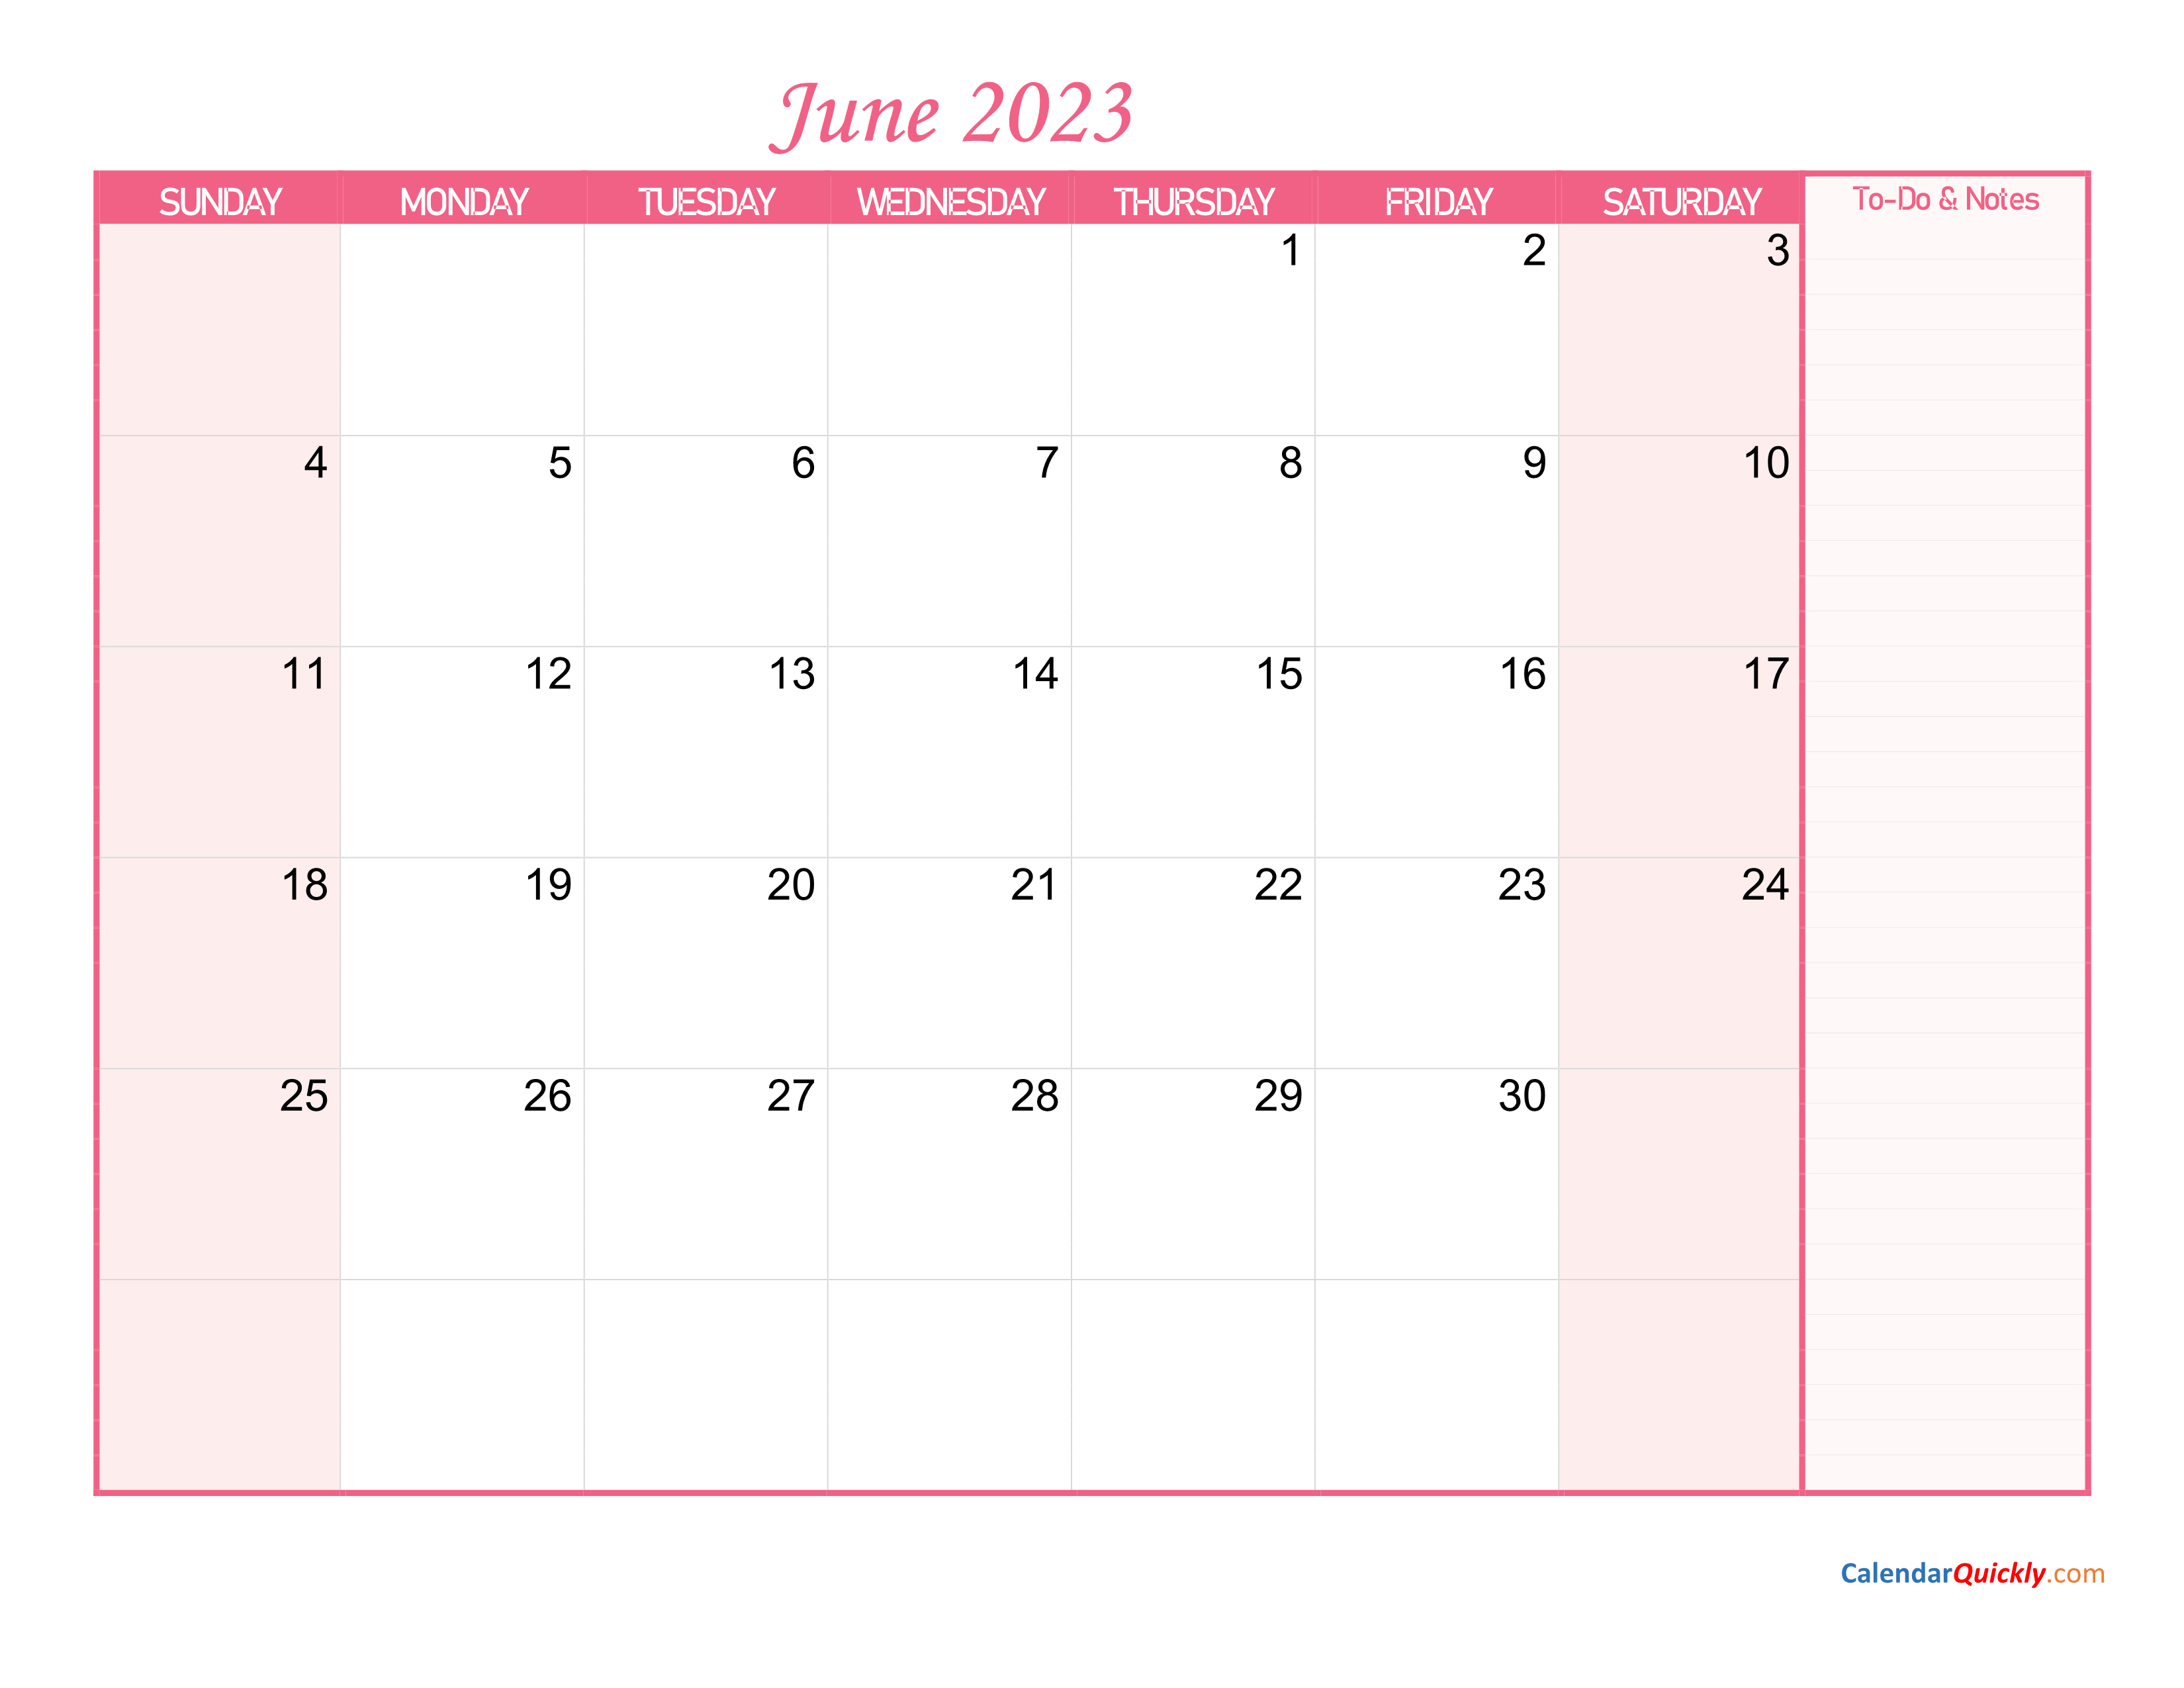 june-calendar-2023-printable-calendar-quickly-vrogue